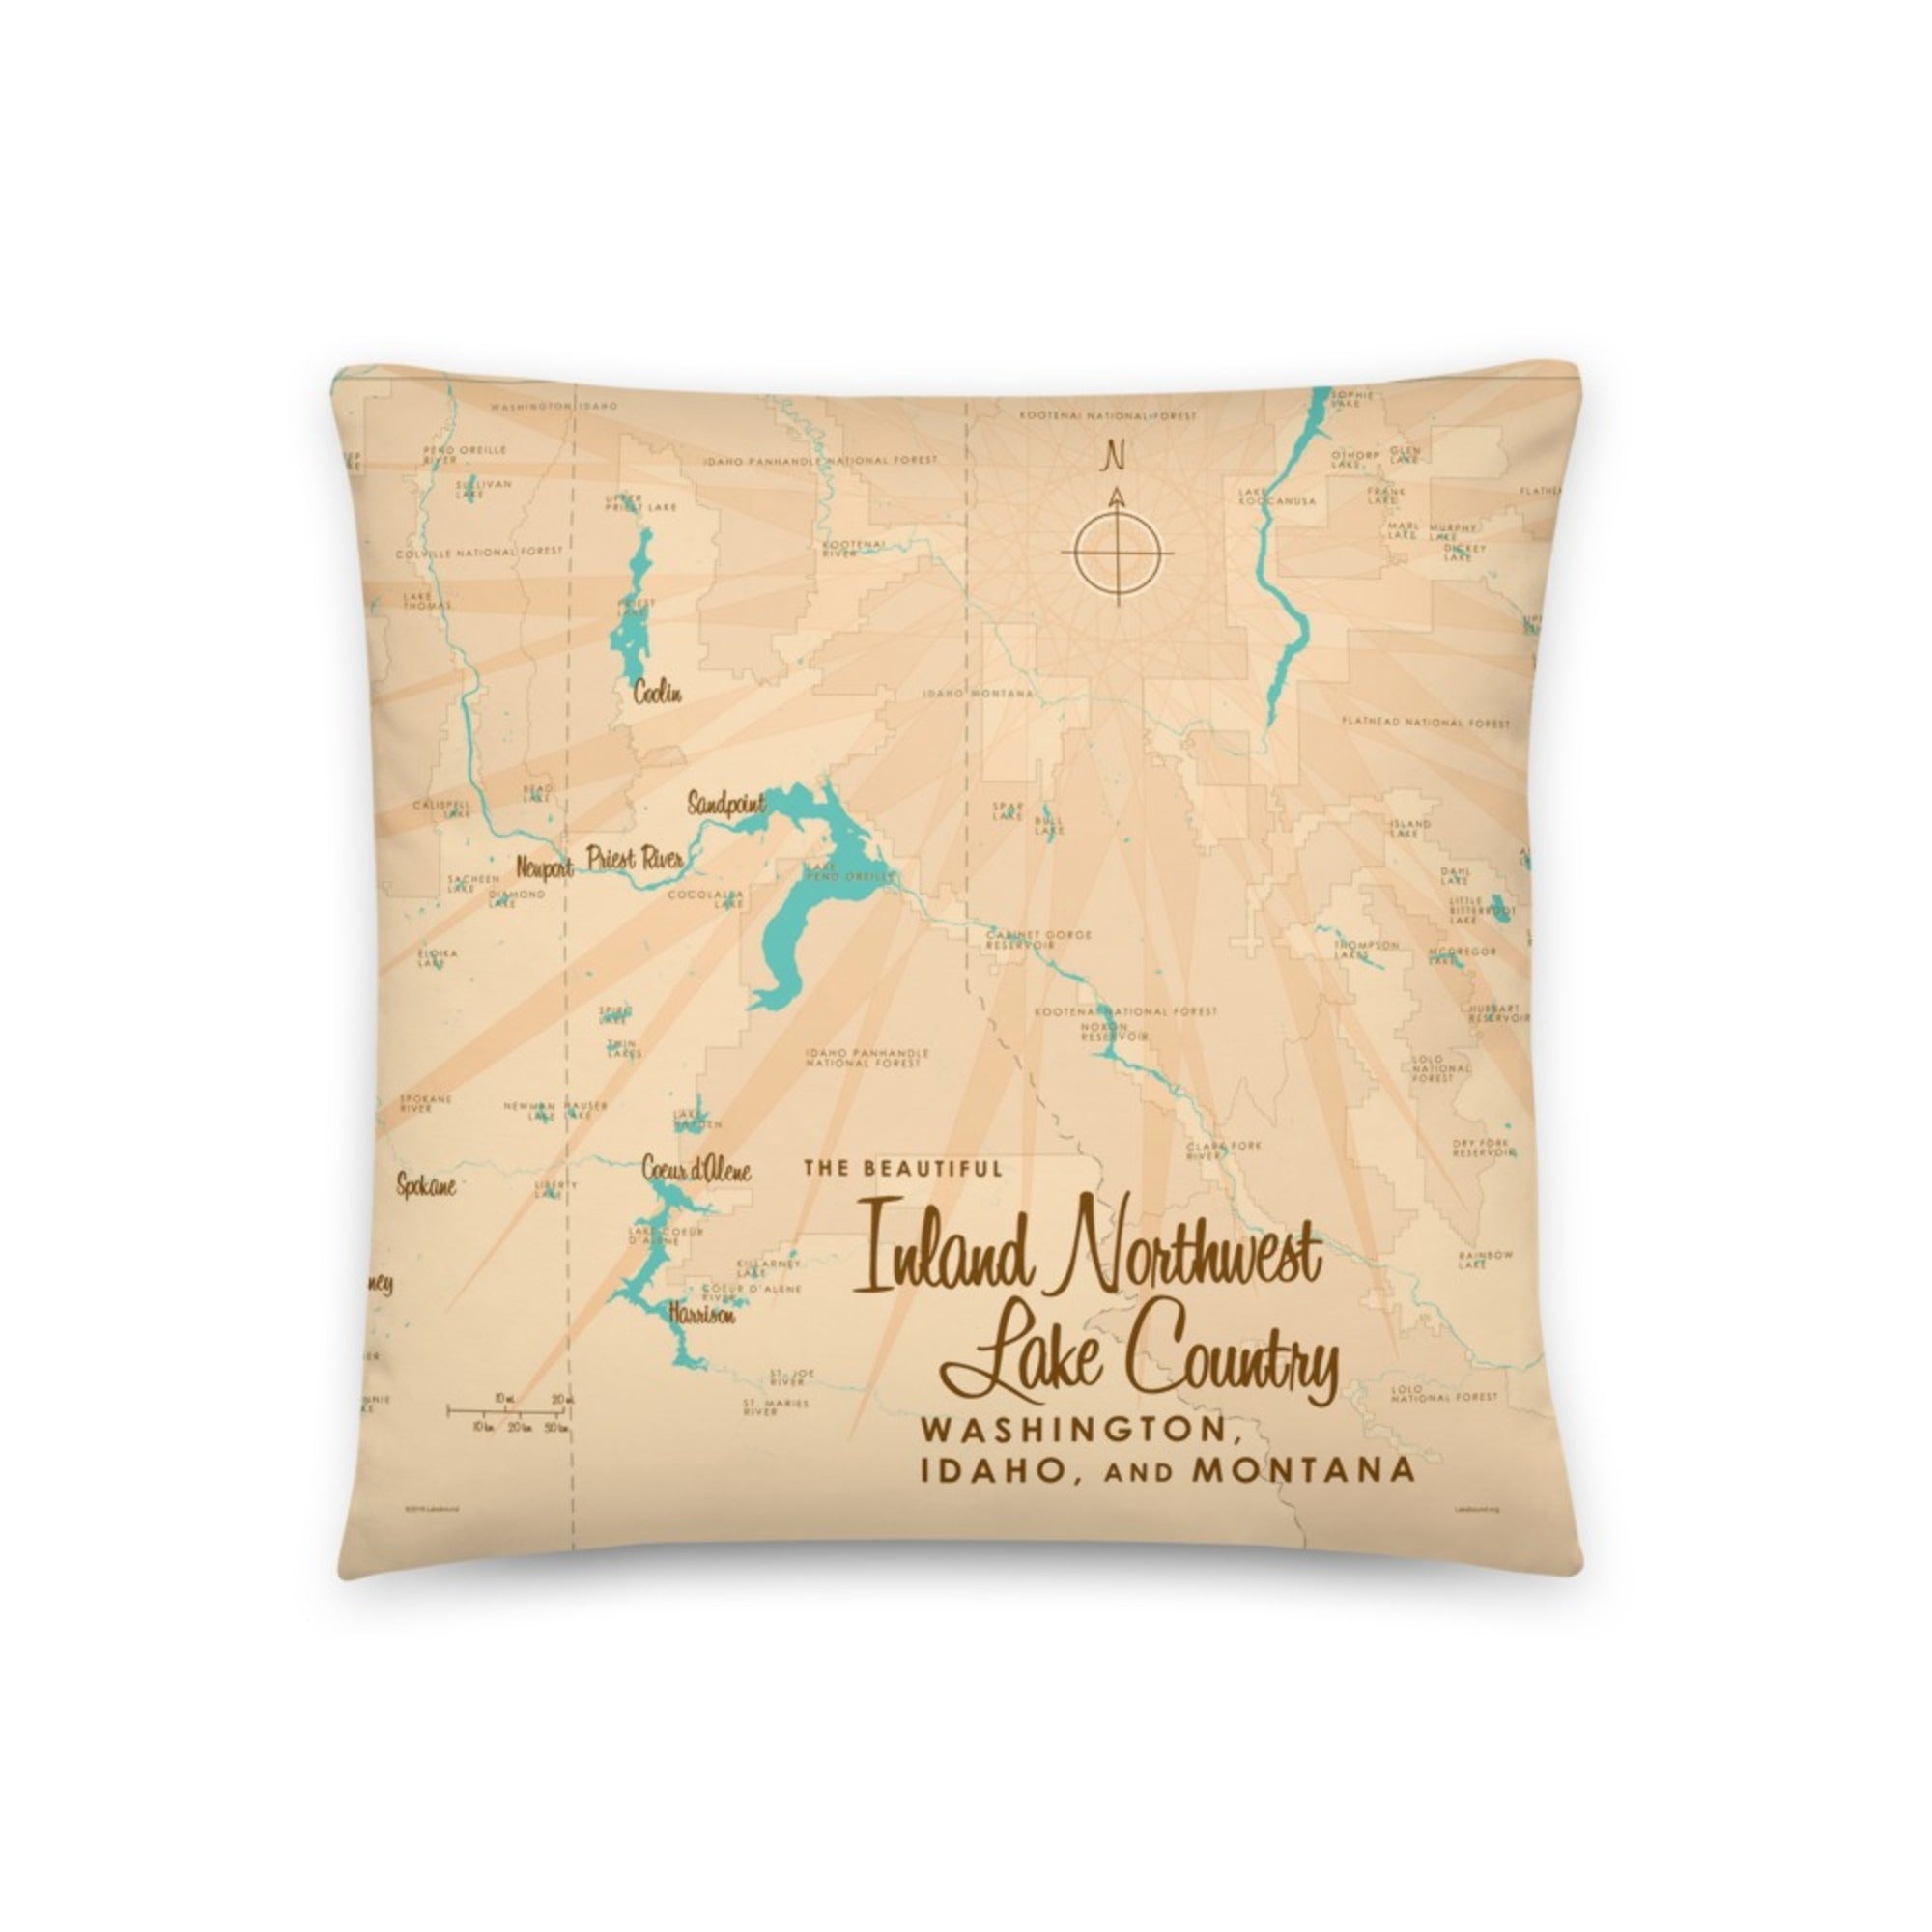 Inland Northwest Lake Country Washington Idaho Montana Pillow